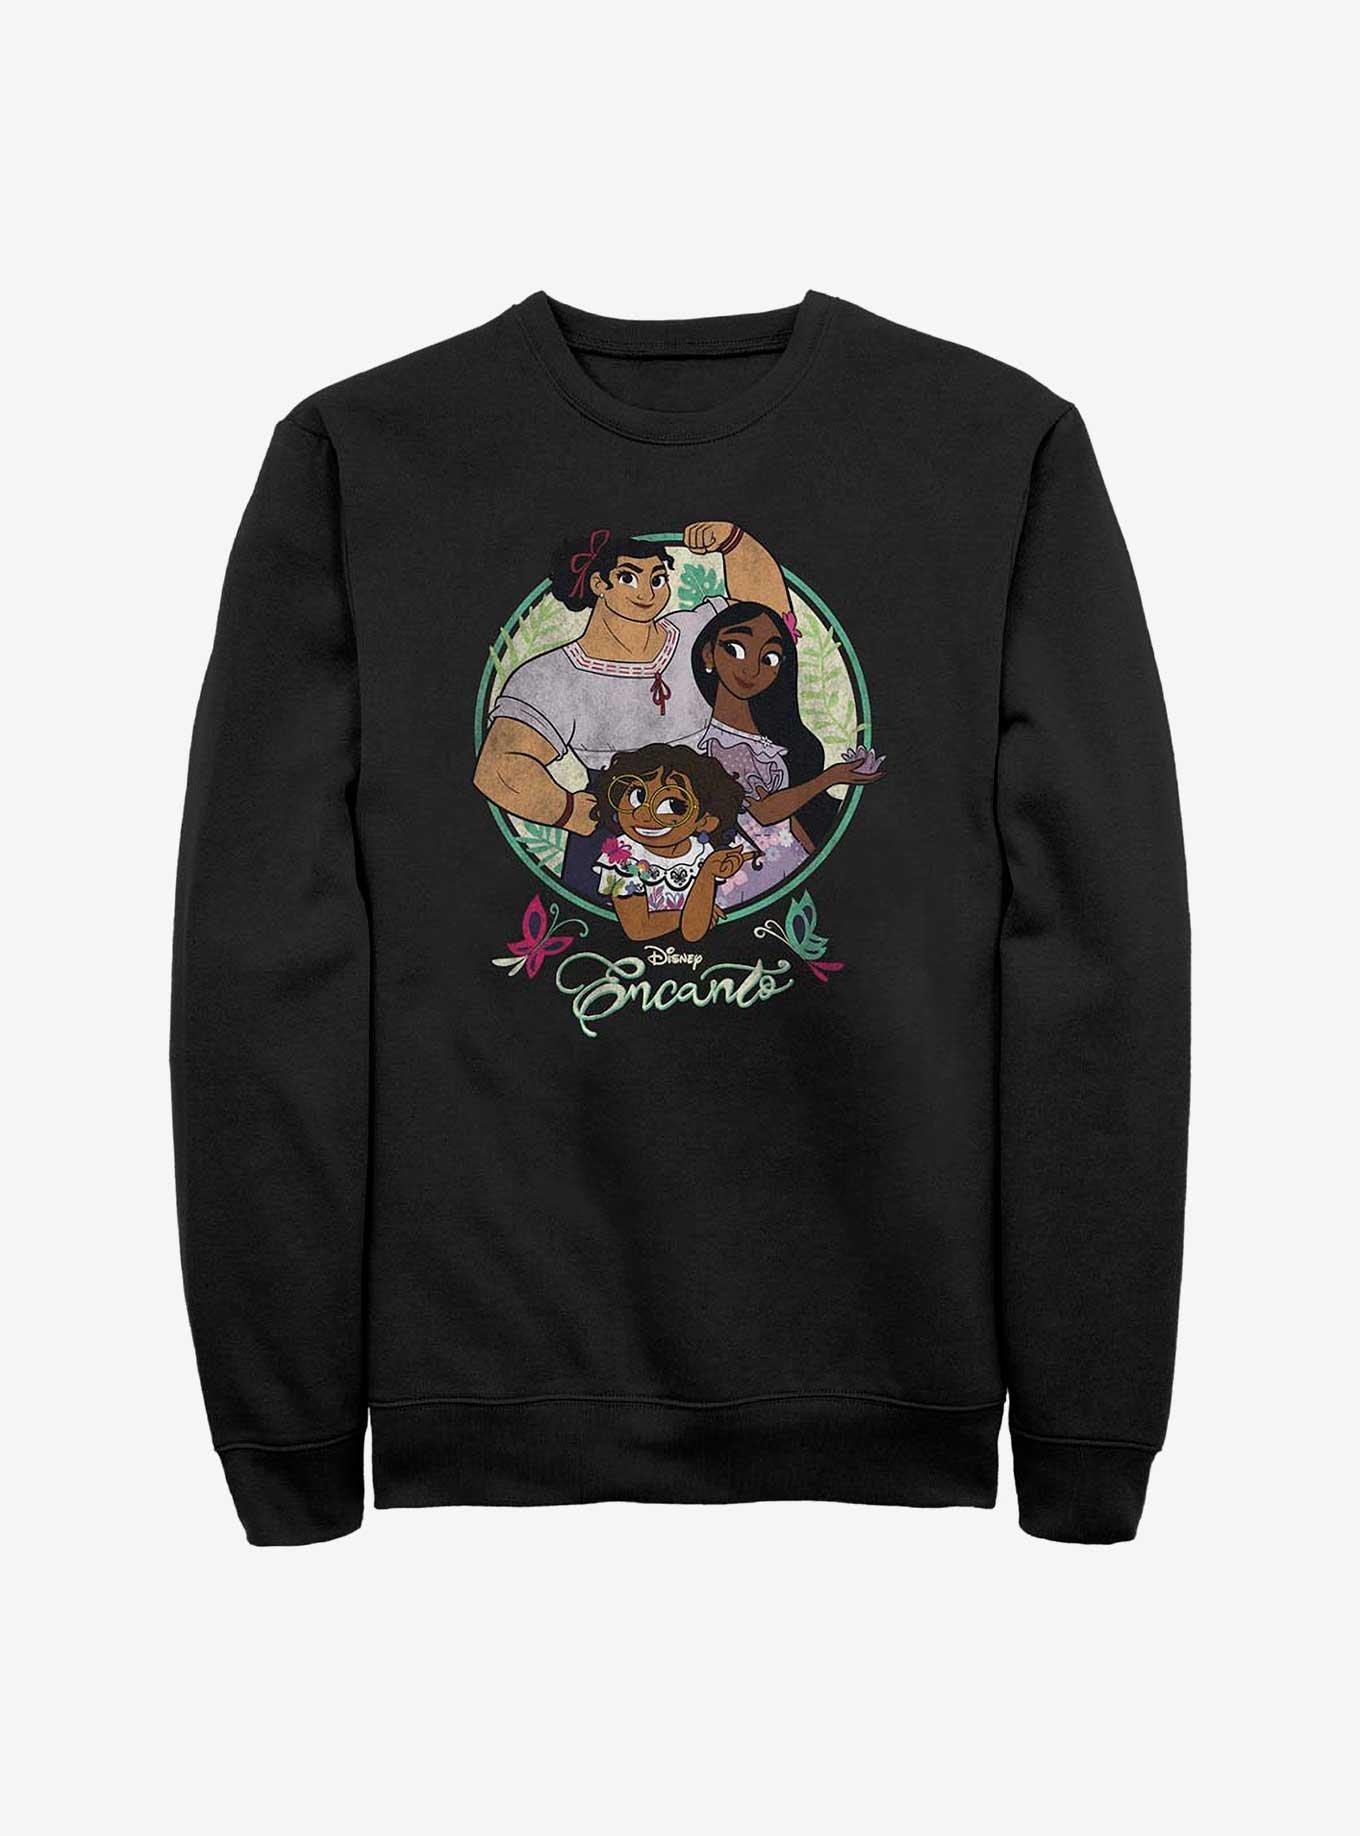 Disney Encanto Sisters Sweatshirt, BLACK, hi-res